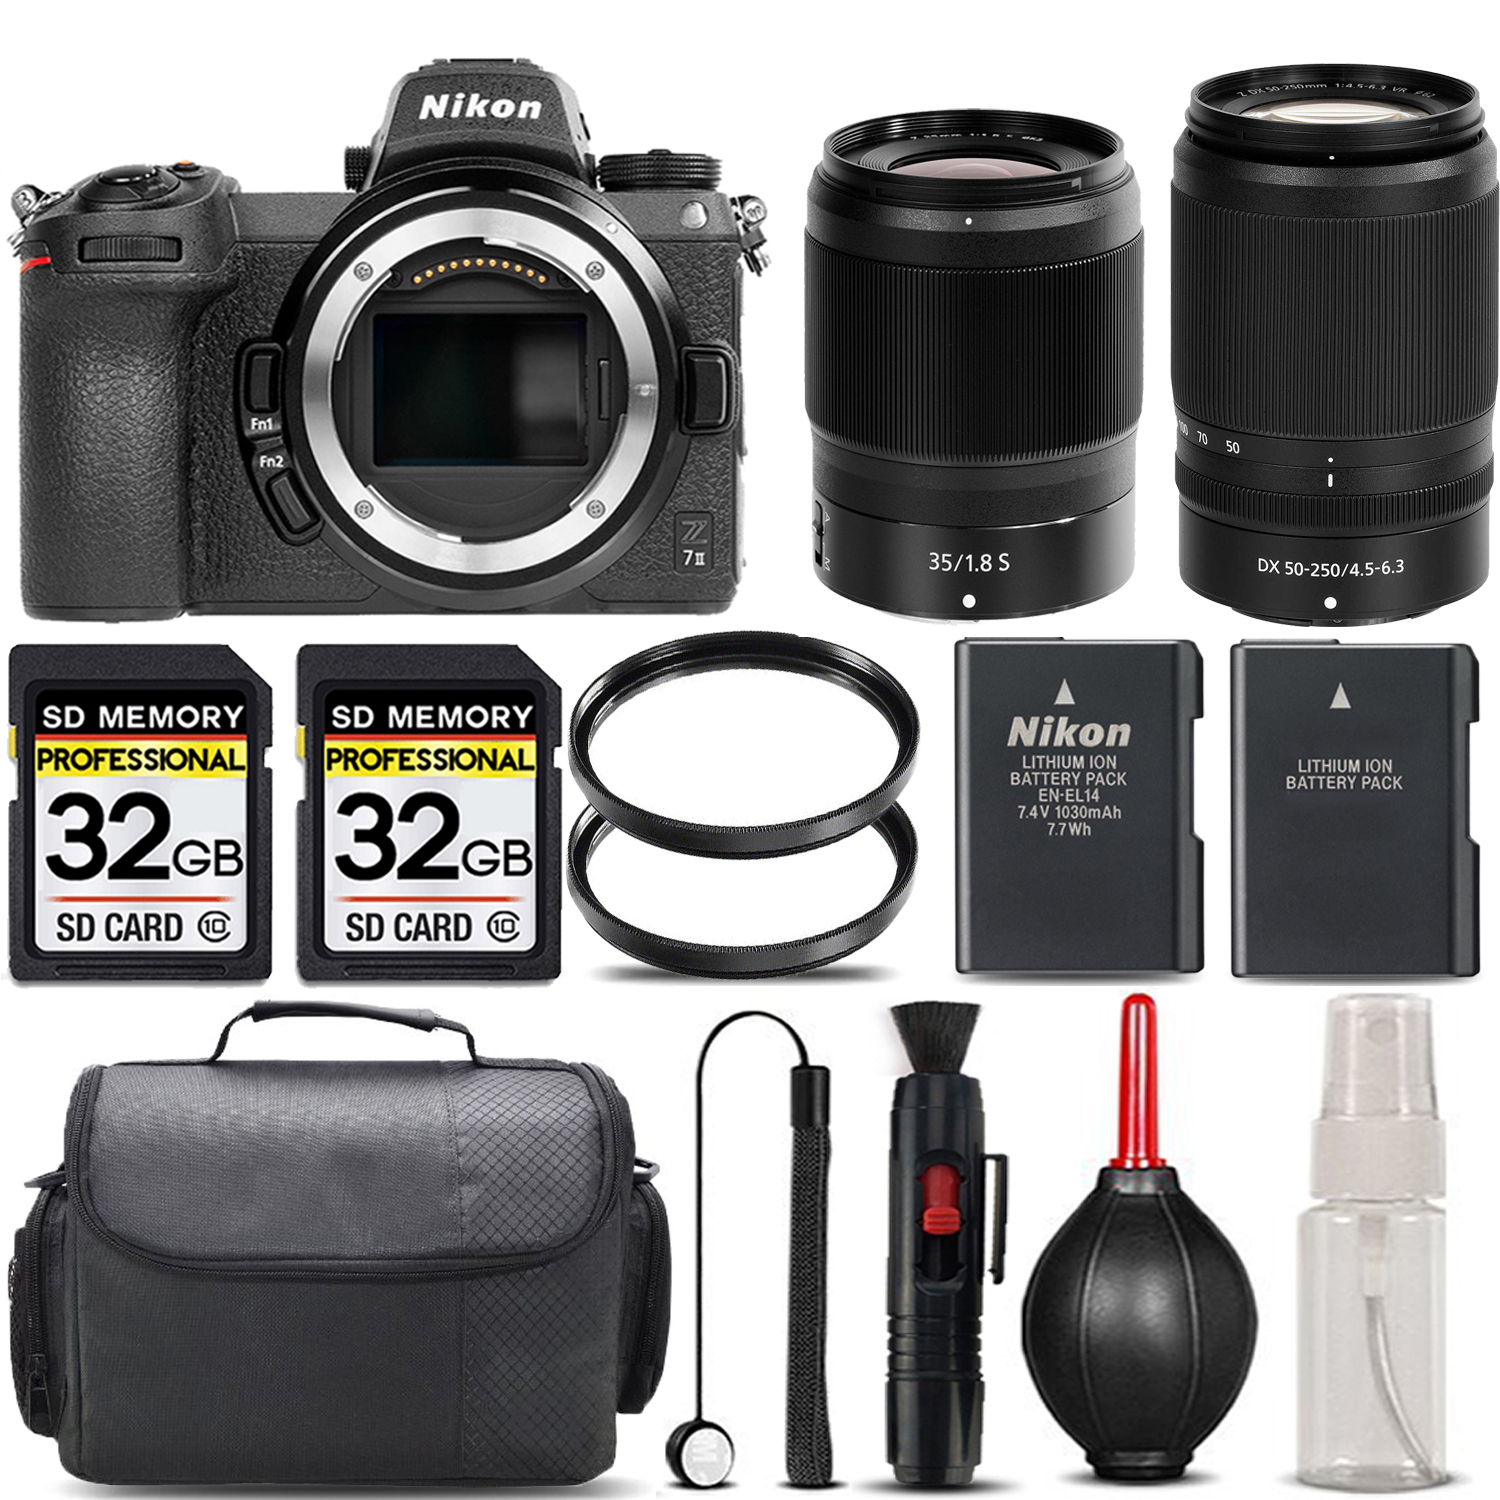 Z7 II + 50-250mm f/4.5-6.3 Lens + 35mm f/1.8 S Lens + Handbag - SAVE BIG KIT *FREE SHIPPING*